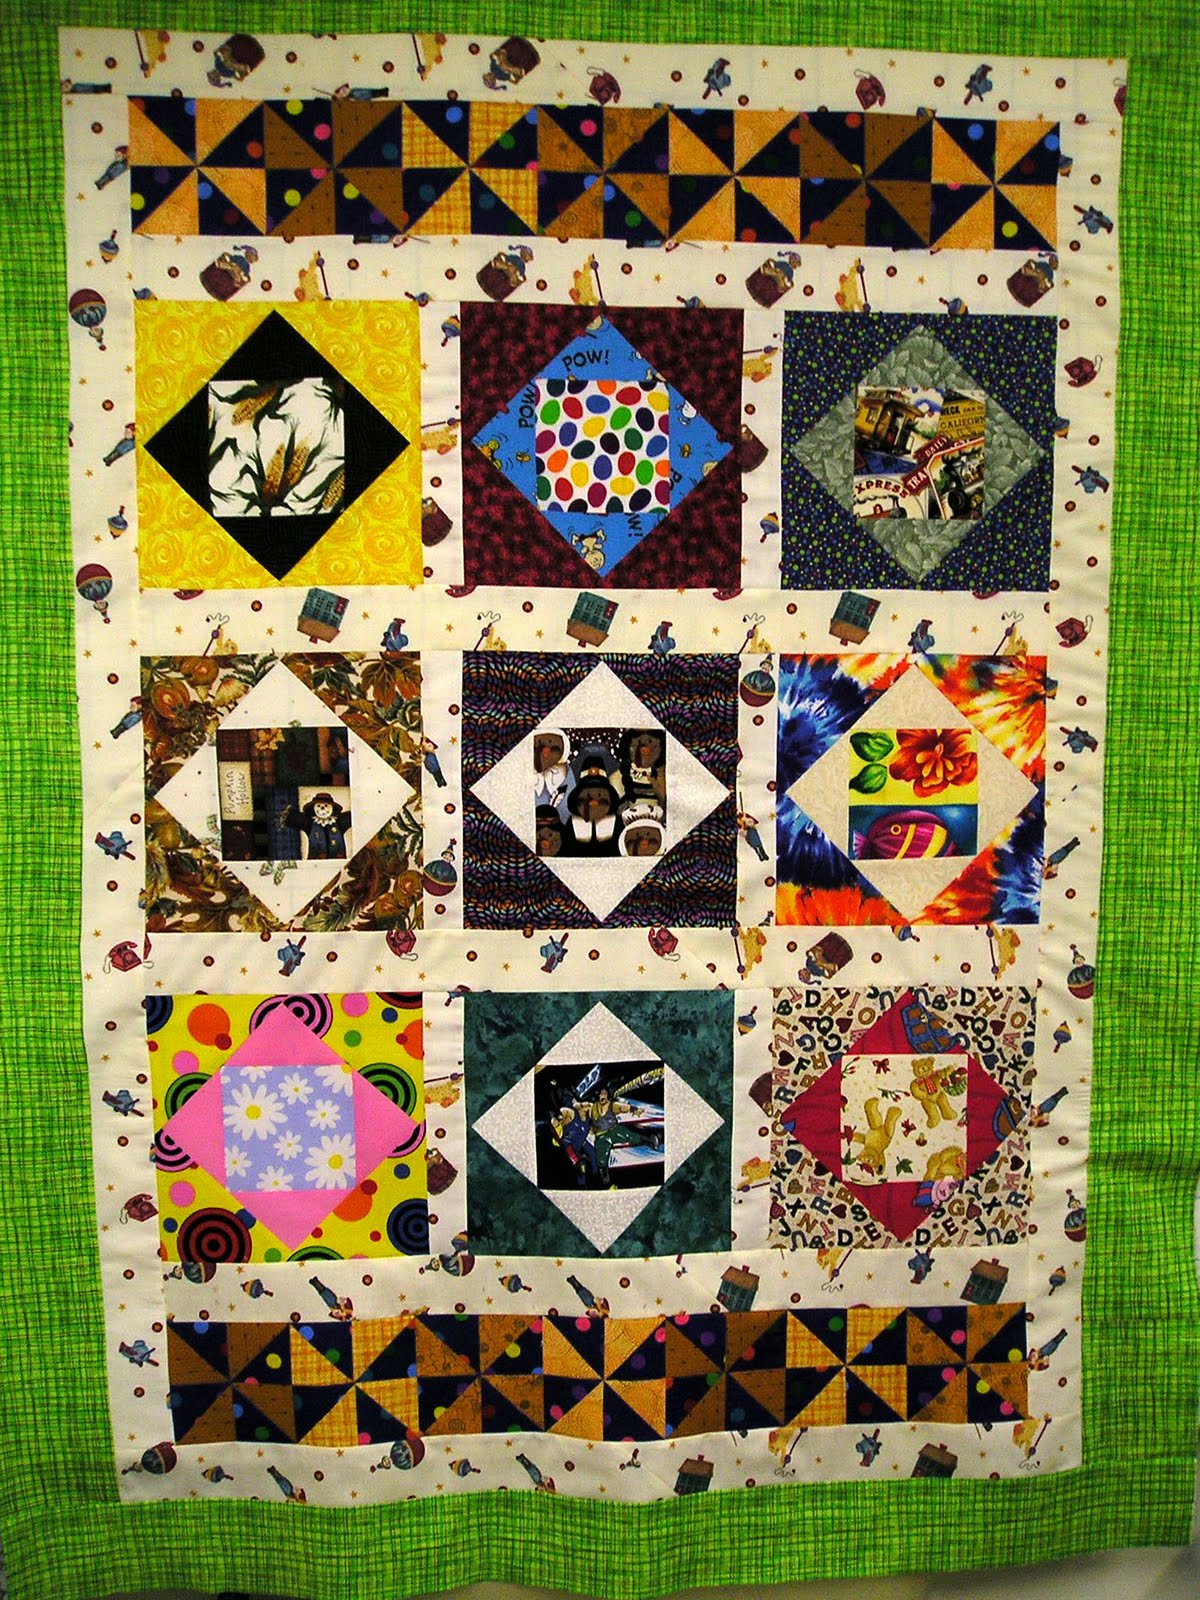 The Proficient Needle: Quilts 2010